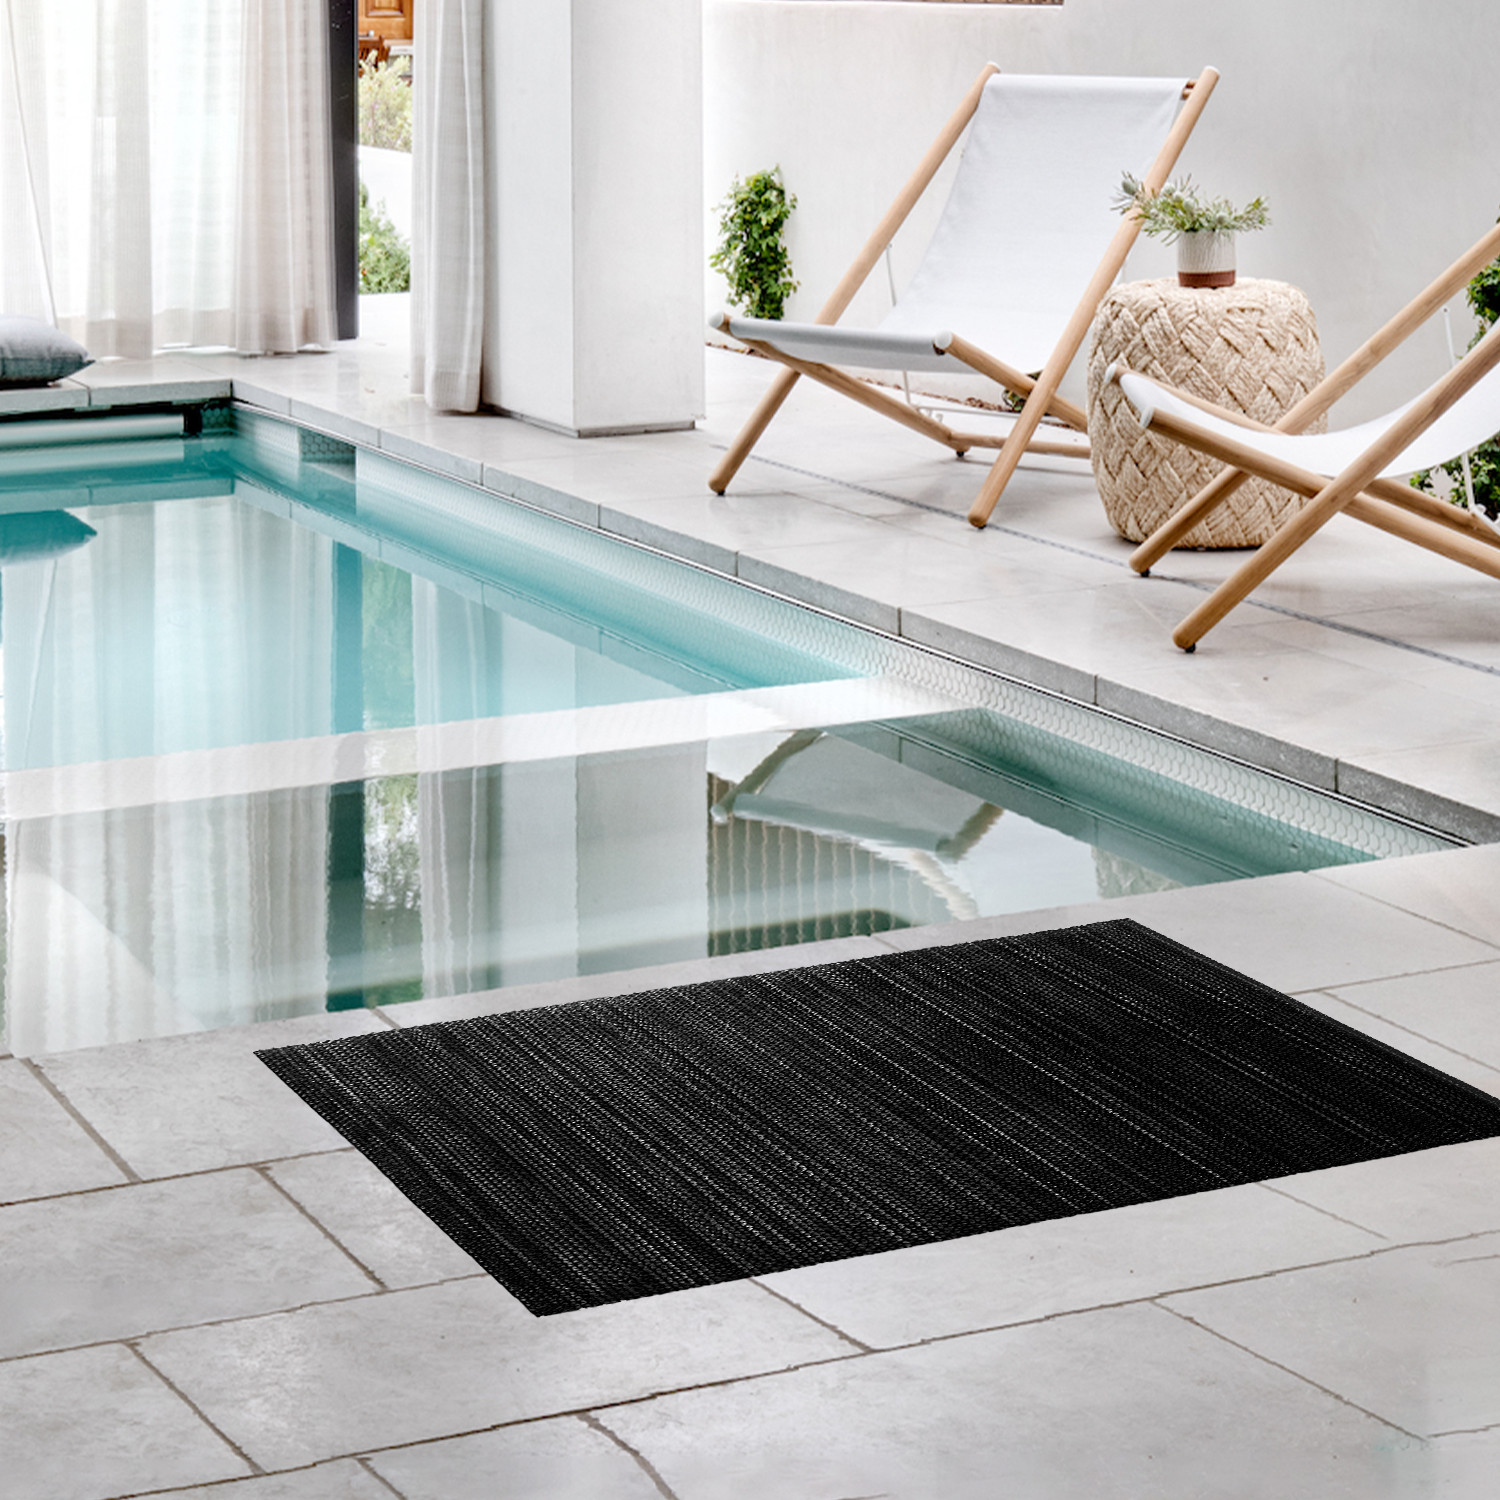 Kuber Industries Rubber Waterproof Anti-Skid Swimming Pool Mat|Shower Mat|Rainmat For Entrance Area,Bathroom,2 x 3 Feet (Black)